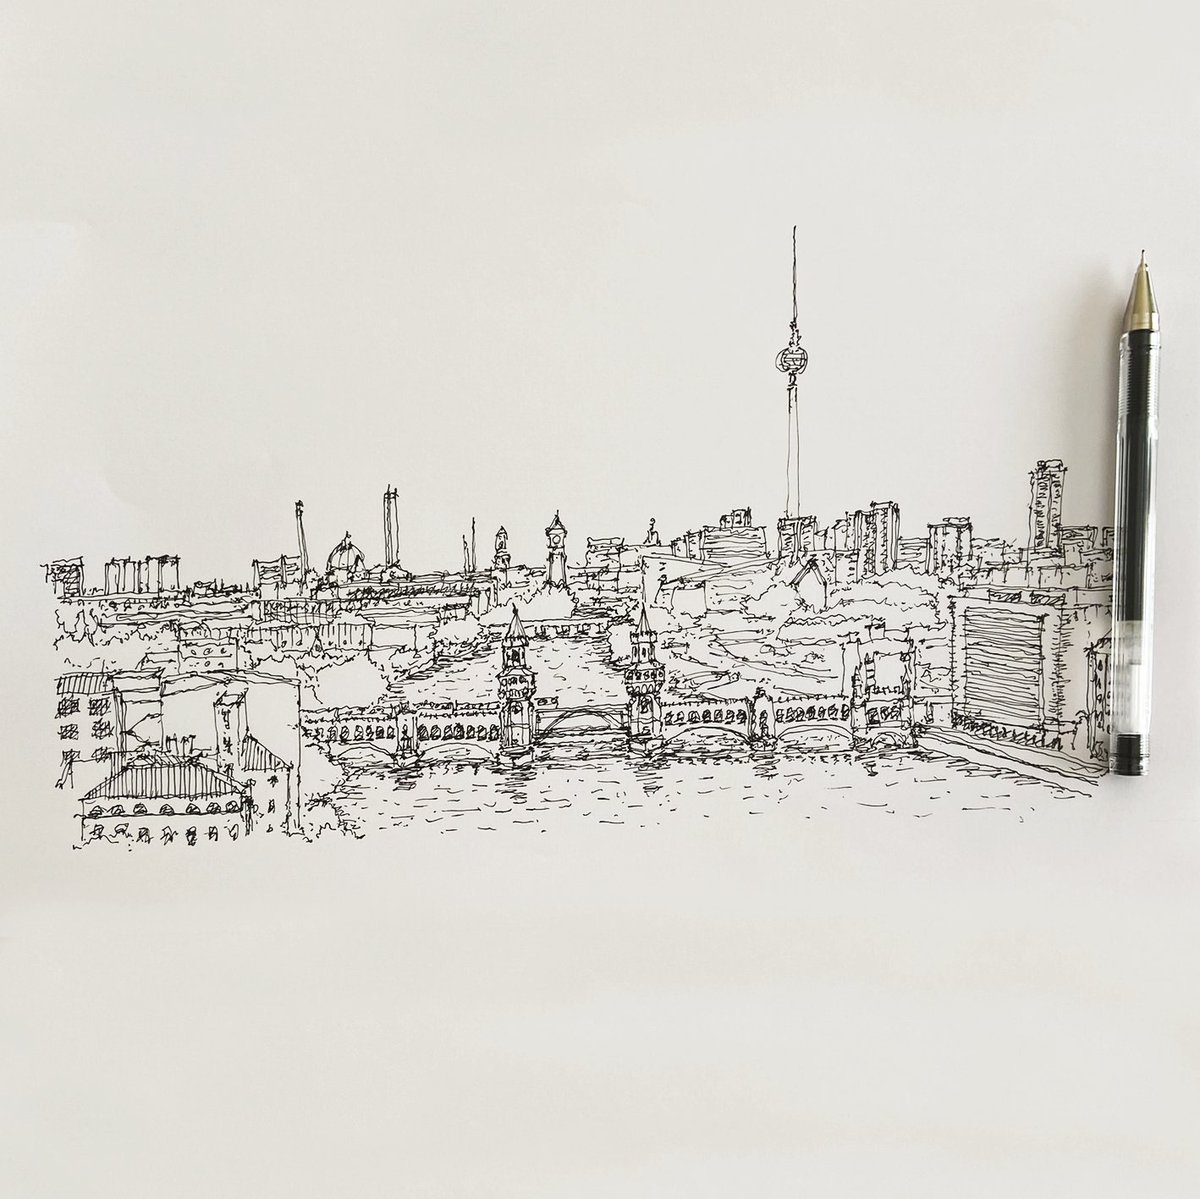 Aerial view of the Oberbaum Bridge in Berlin. #Berlin #OberbaumBridge #Oberbaumbrucke #BerlinTvTower #Germany #InkDrawing #UrbanSketch #SketchDaily #Sketch #Drawing #Pen #Ink #Pendrawing #Sketchart #Drawingoftheday #Sketchoftheday #Sketch_Artwork #Architecture #Art